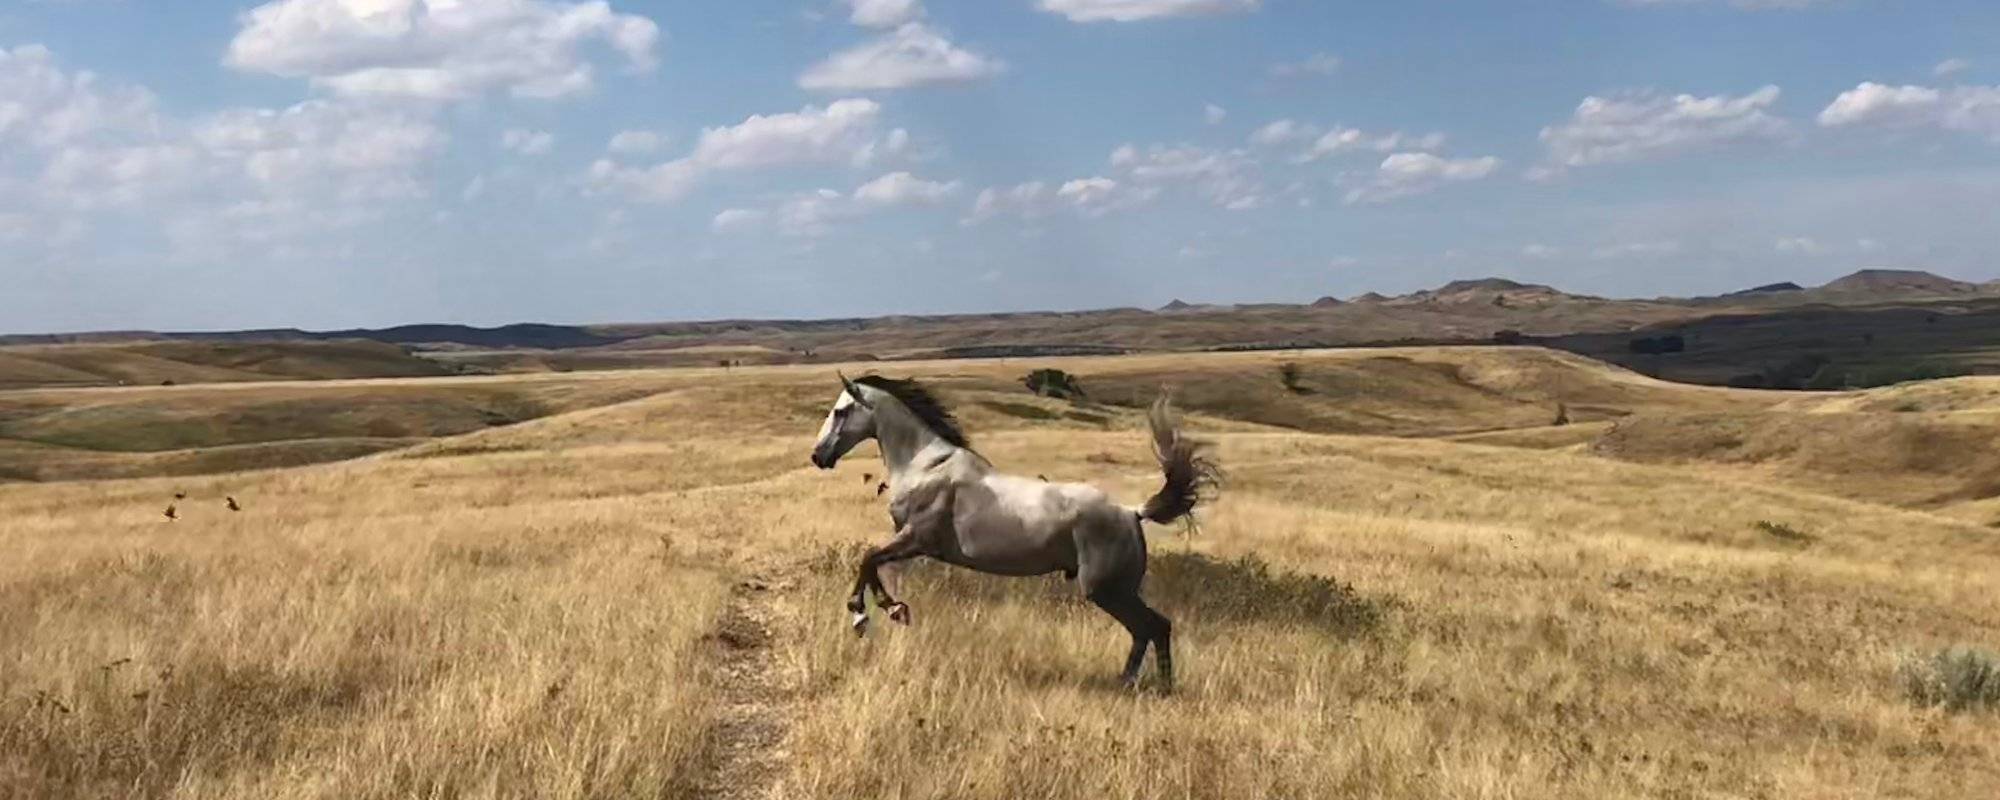 Chasing Wild Horses in South Dakota | Photo Album